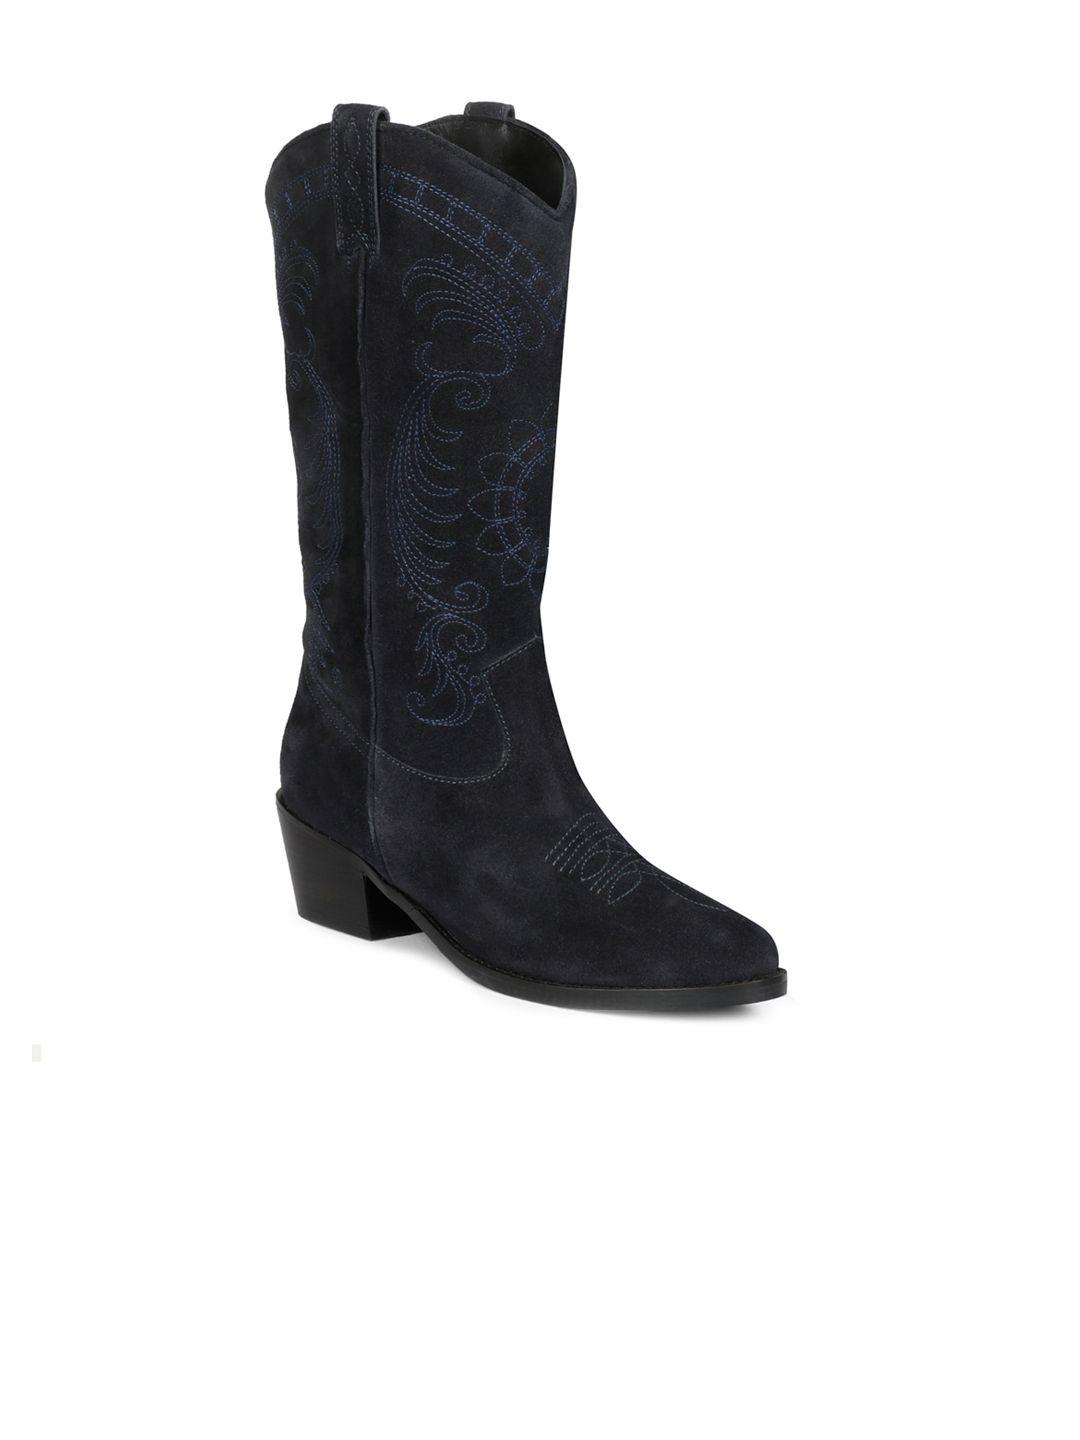 saint-g-women-navy-blue-leather-cowboy-boots